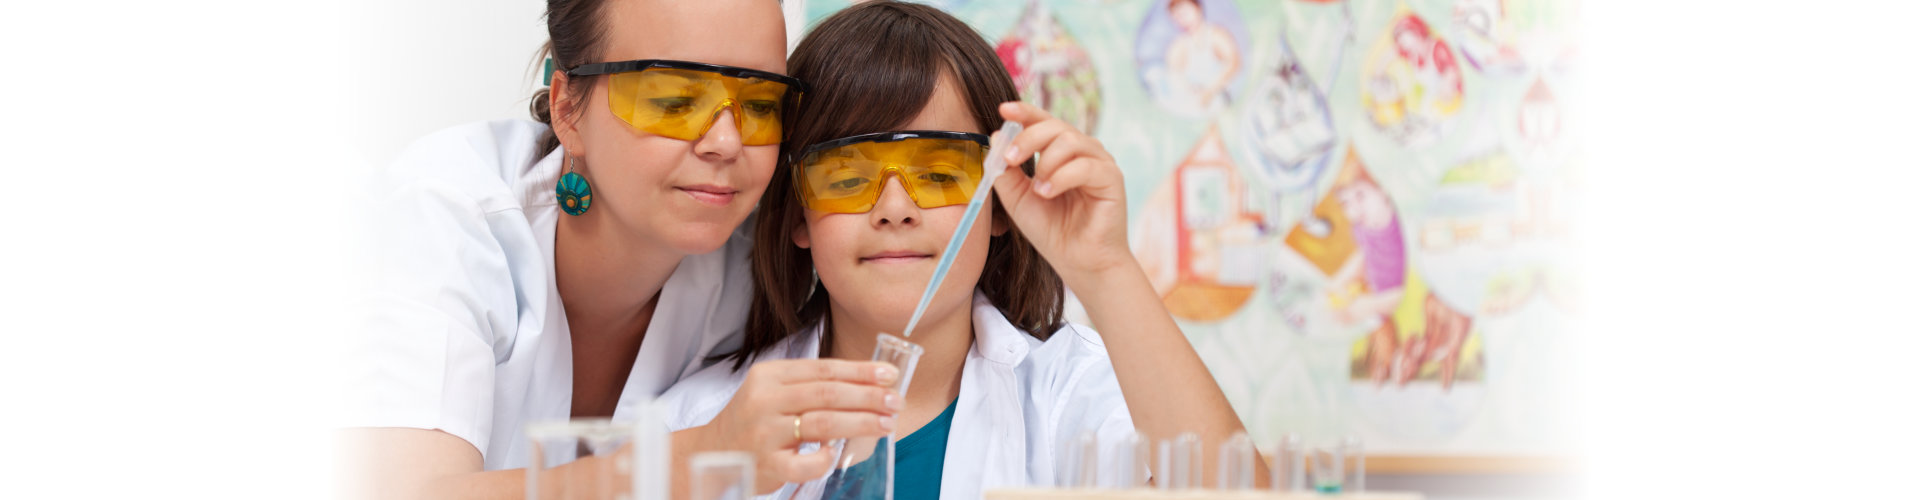 little girl on chemistry class guided by her teacher